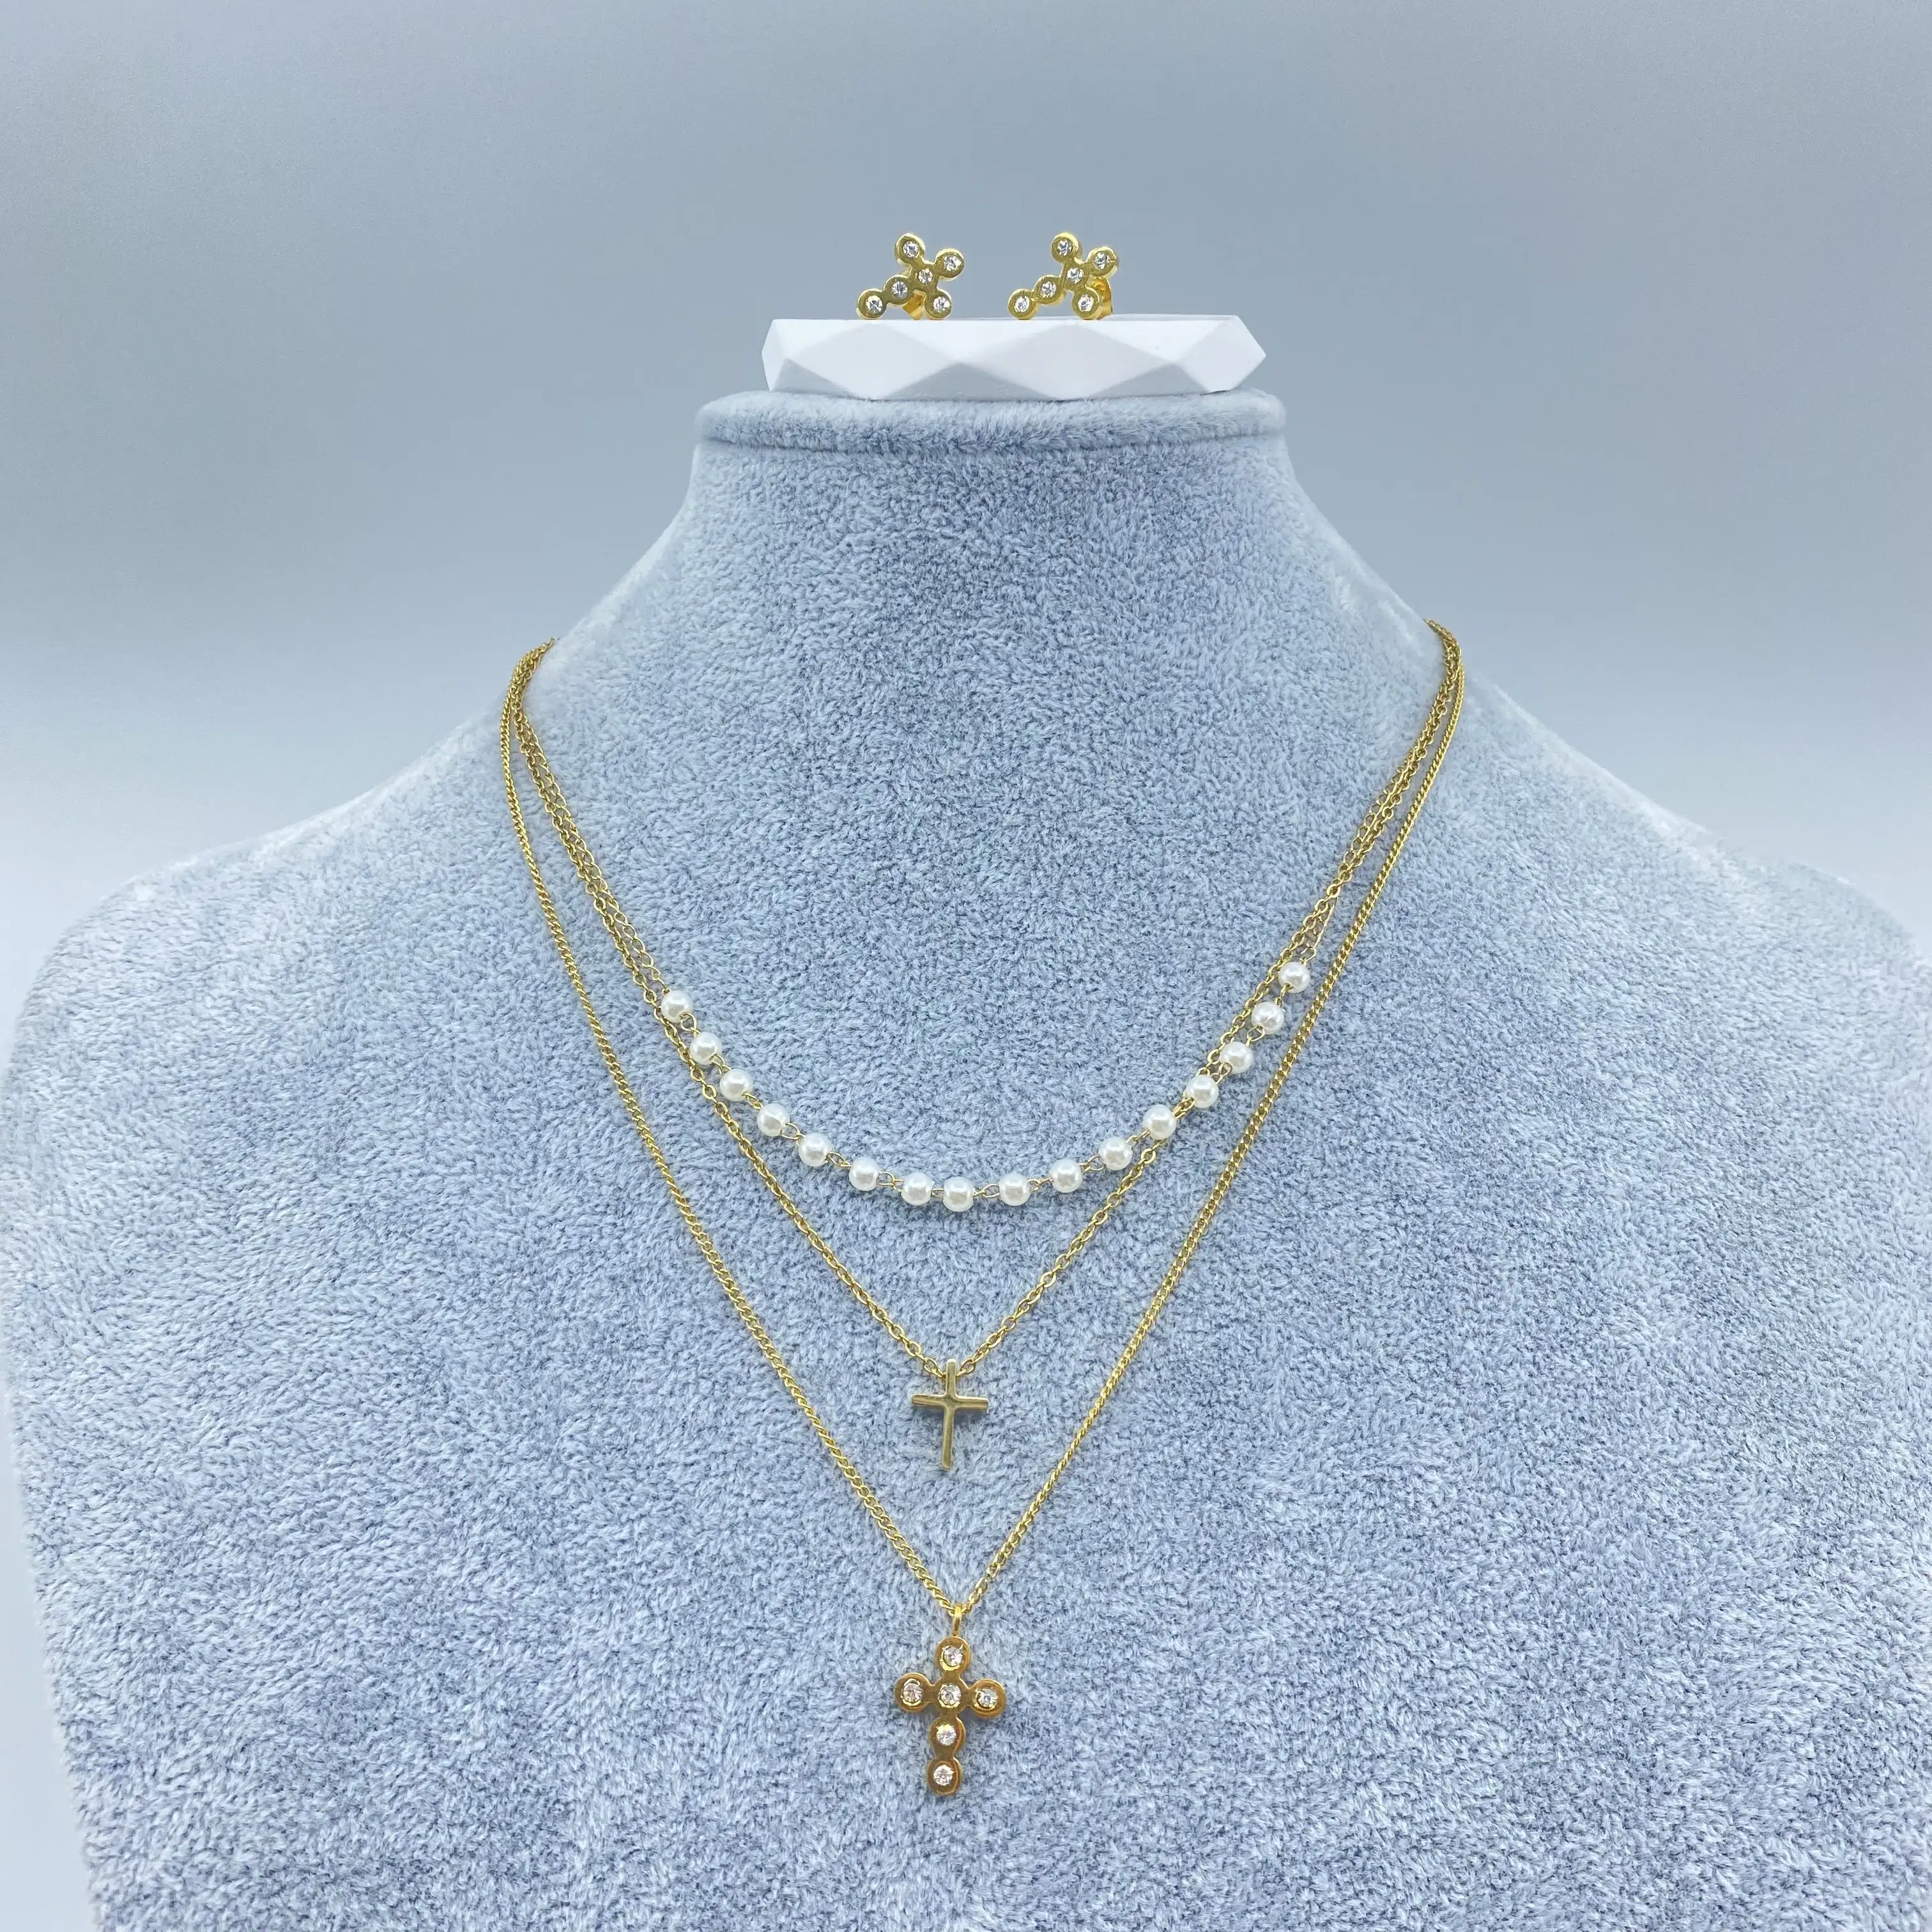 Brand New Three Layers Gold Plated Fashion Jewelry Women Pendant Necklace Earrings Stainless Steel Jewelry Setvvvvvvvvv